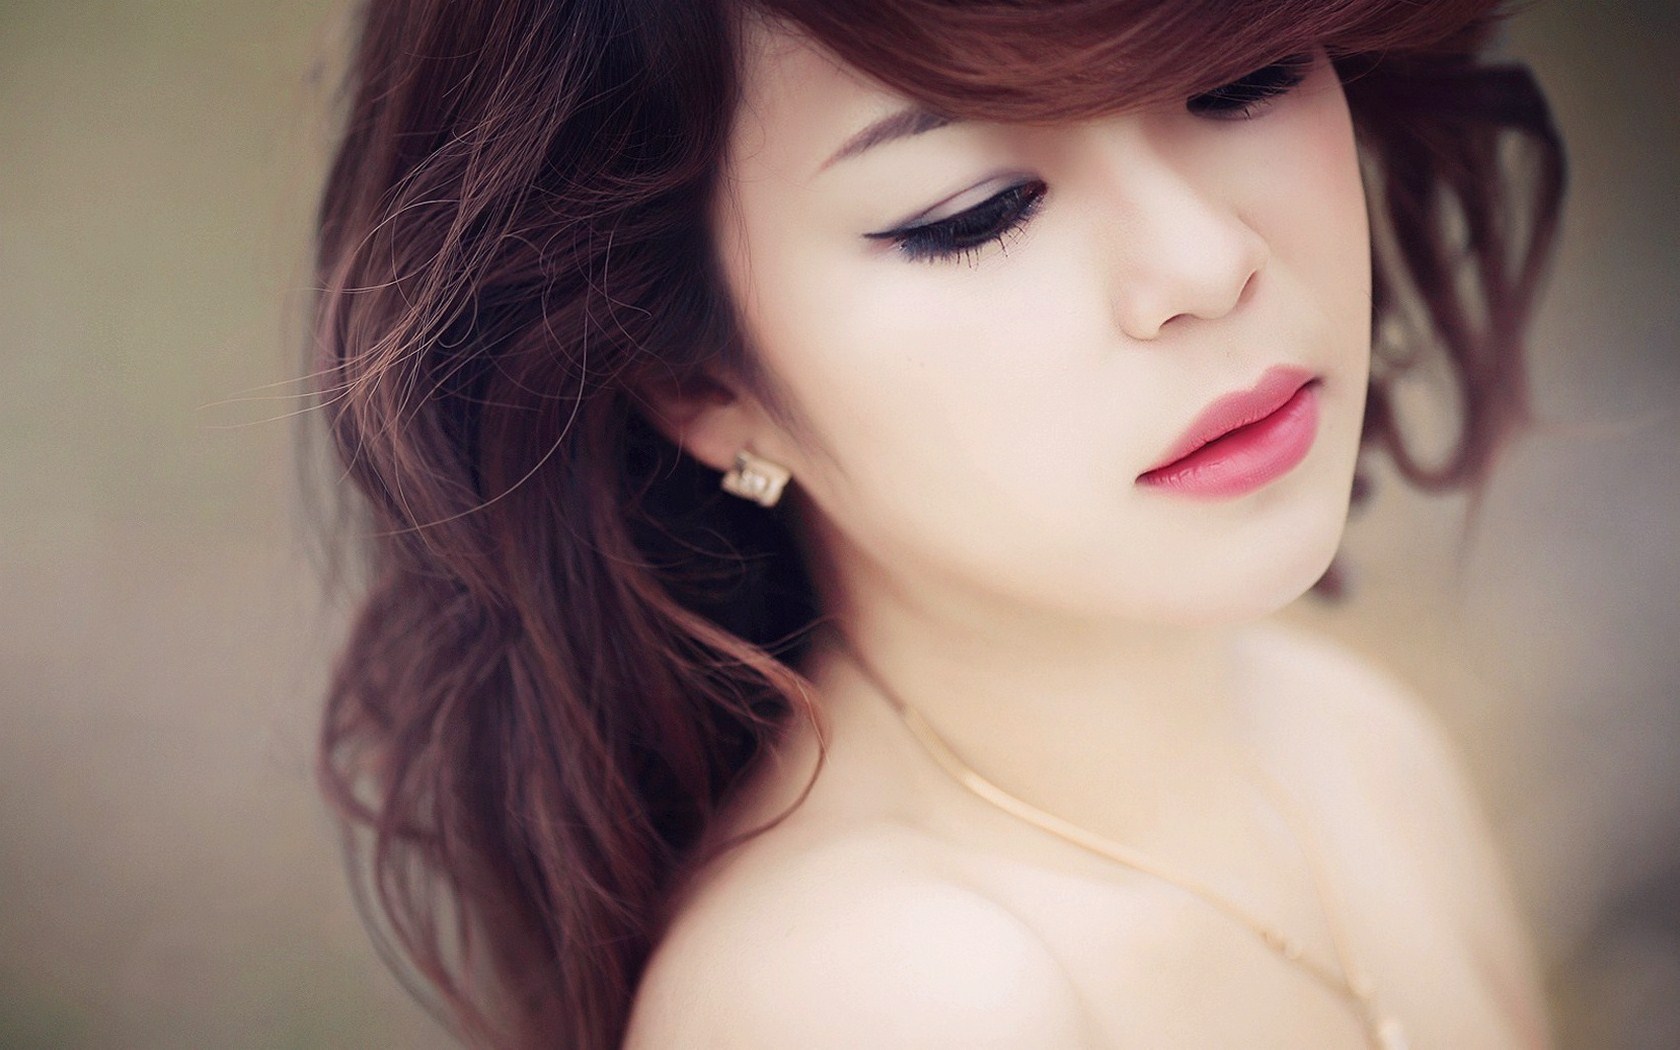 http://eskipaper.com/images/beautiful-asian-girl-portrait-1.jpg